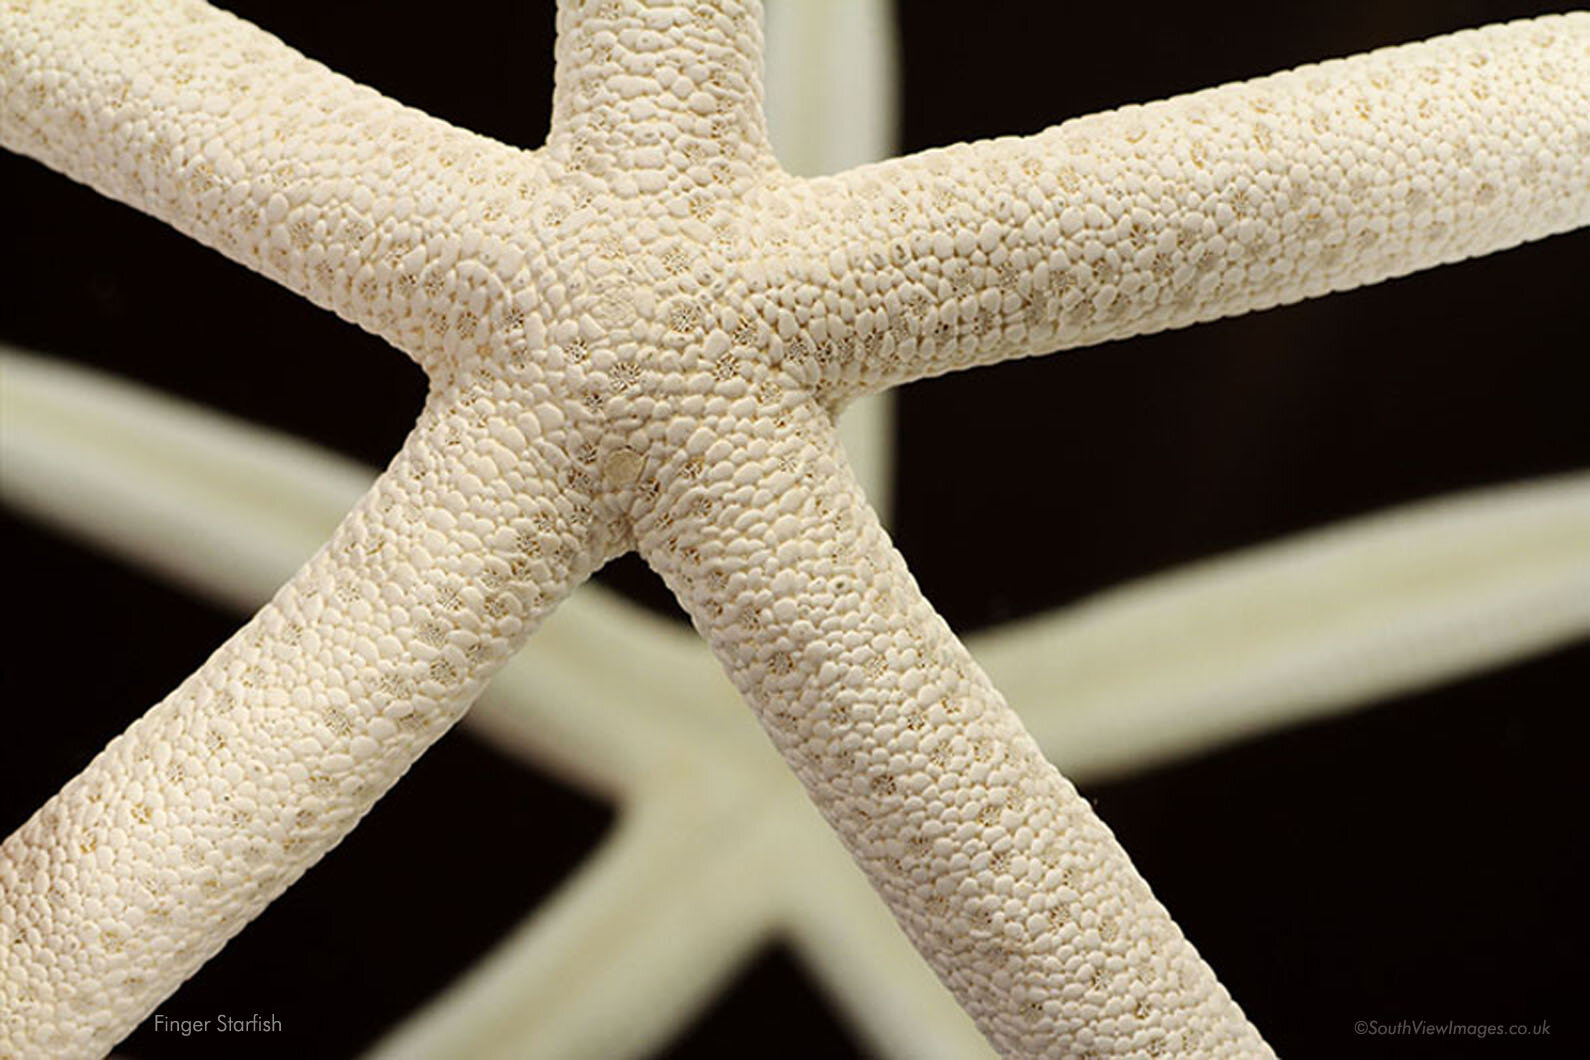 Finger Starfish (2)